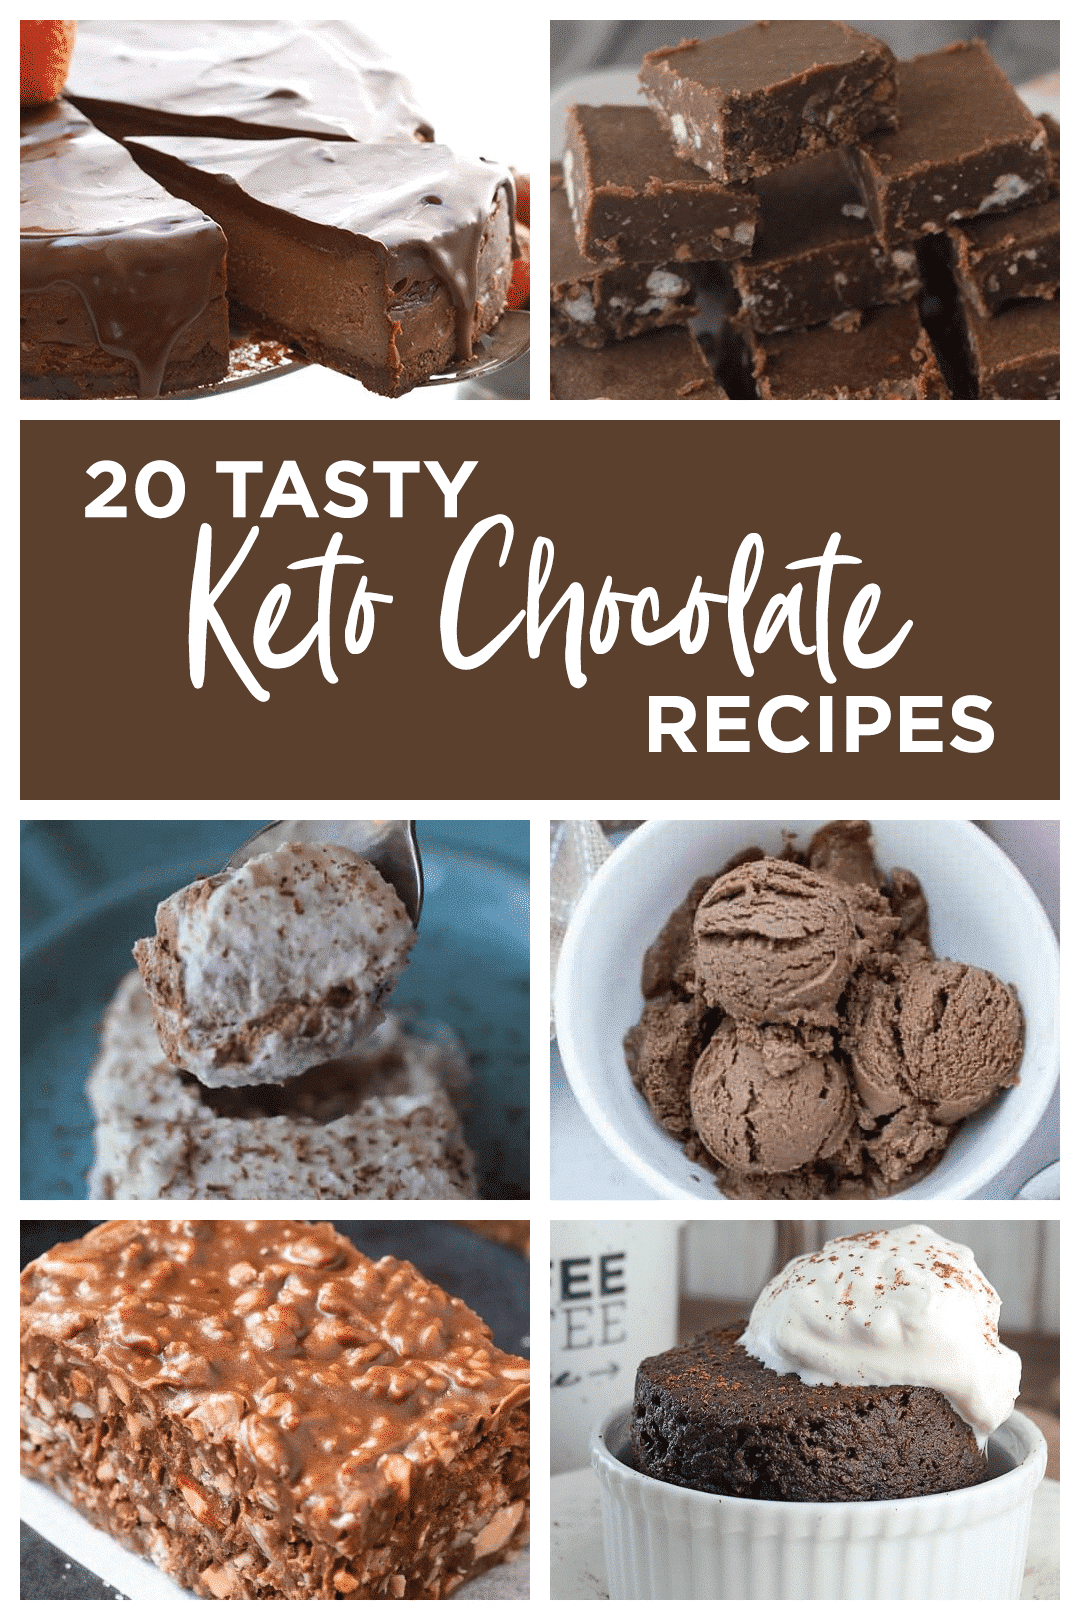 20 Tasty Keto Chocolate Recipe Ideas